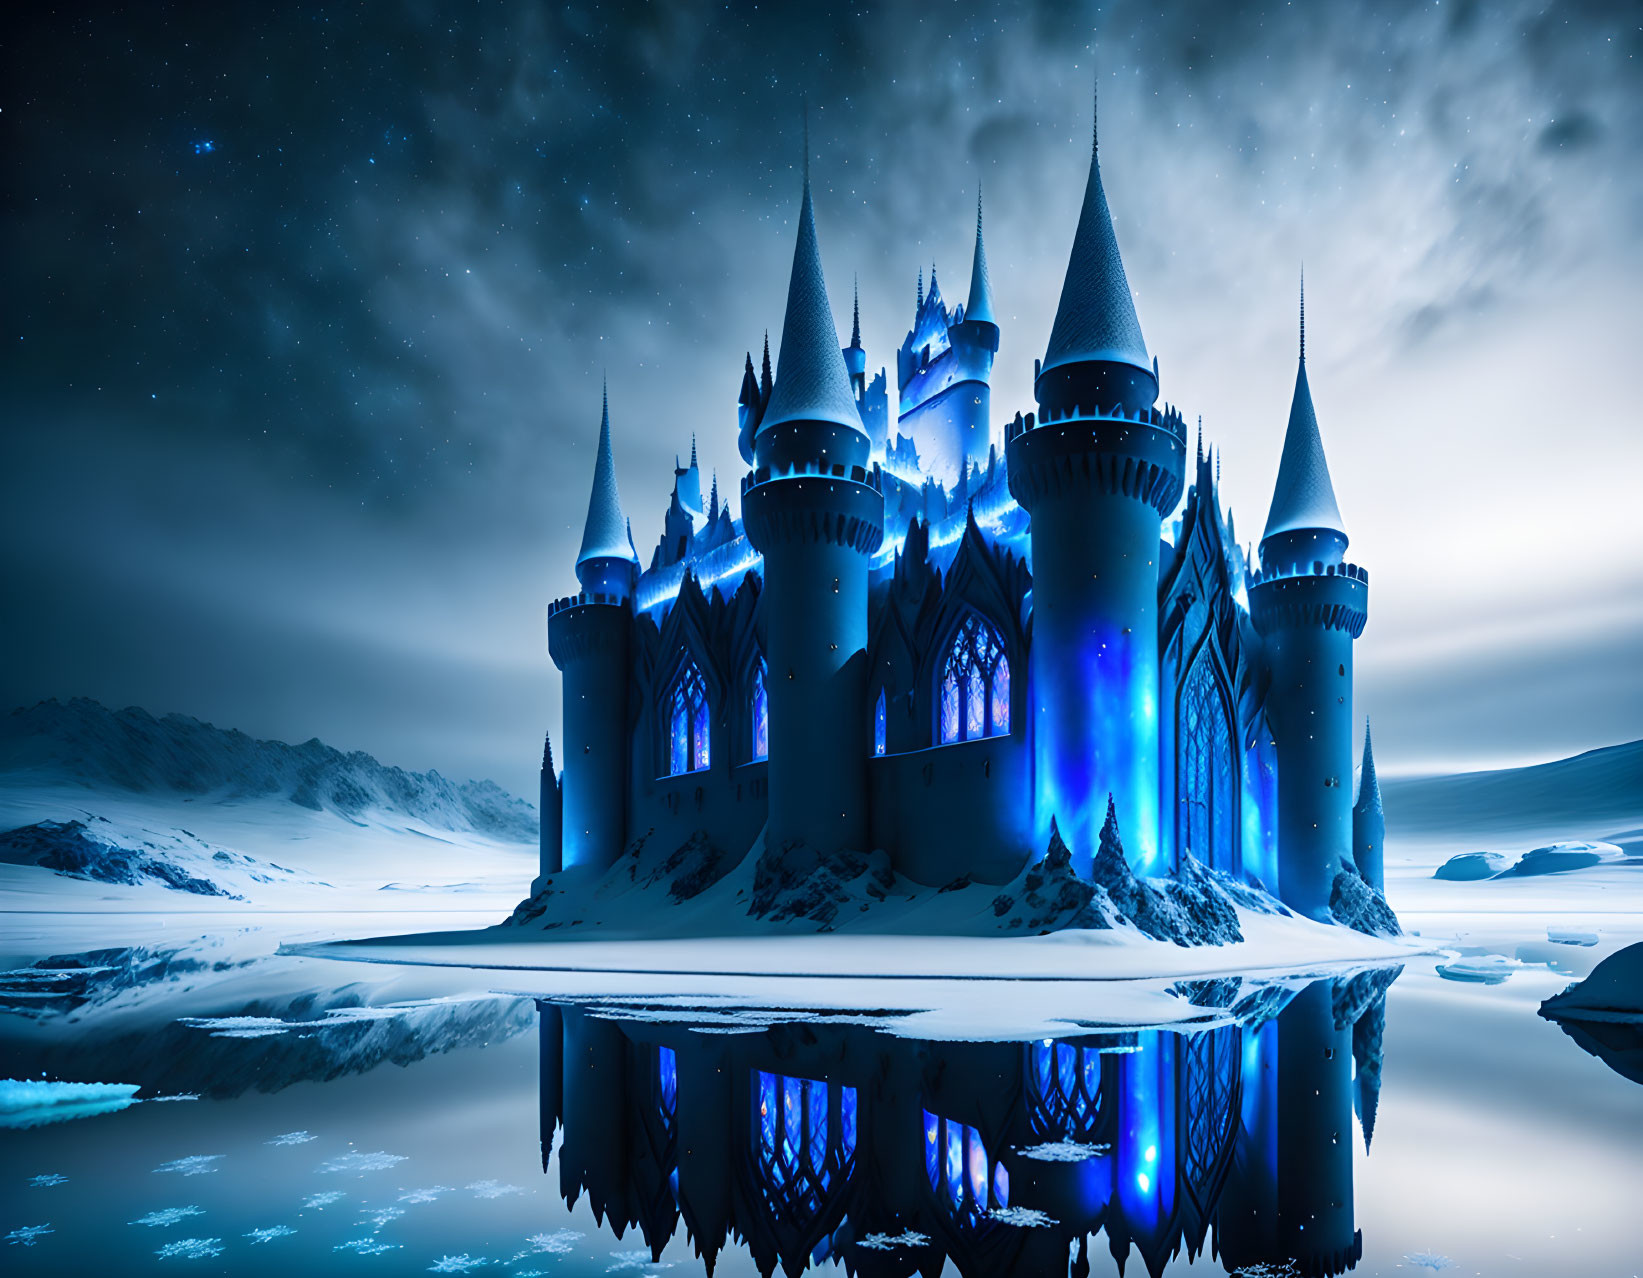 palace of ice